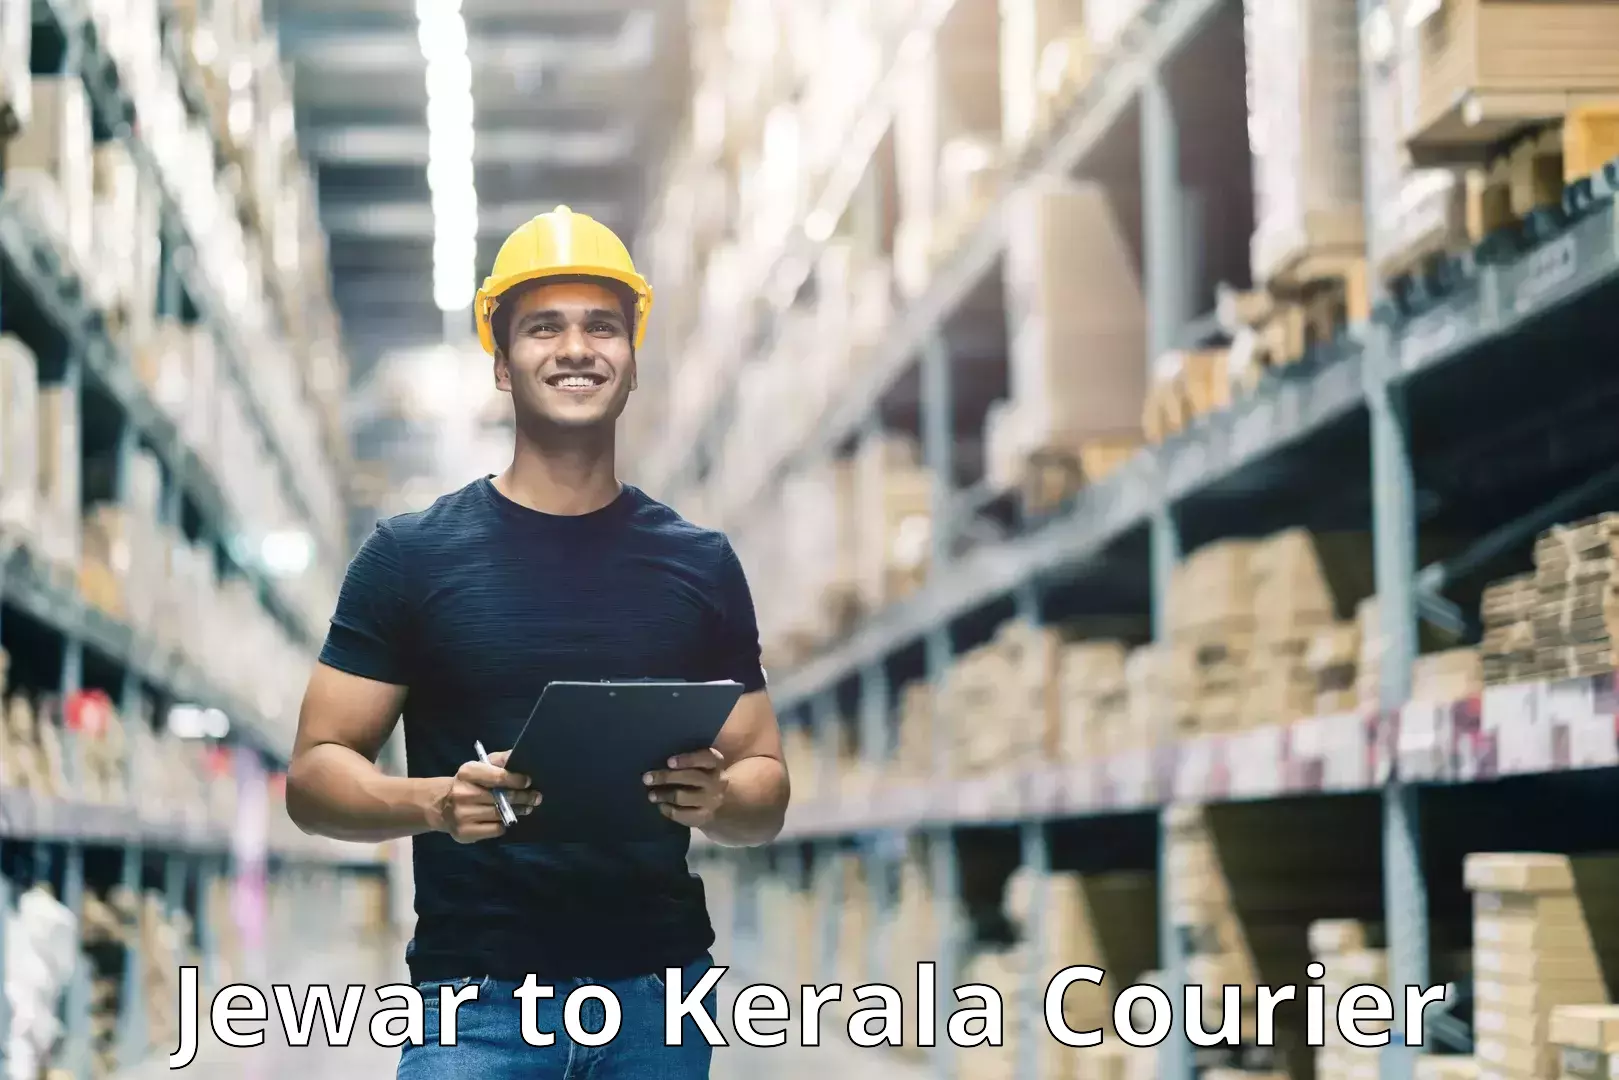 User-friendly delivery service Jewar to Kerala